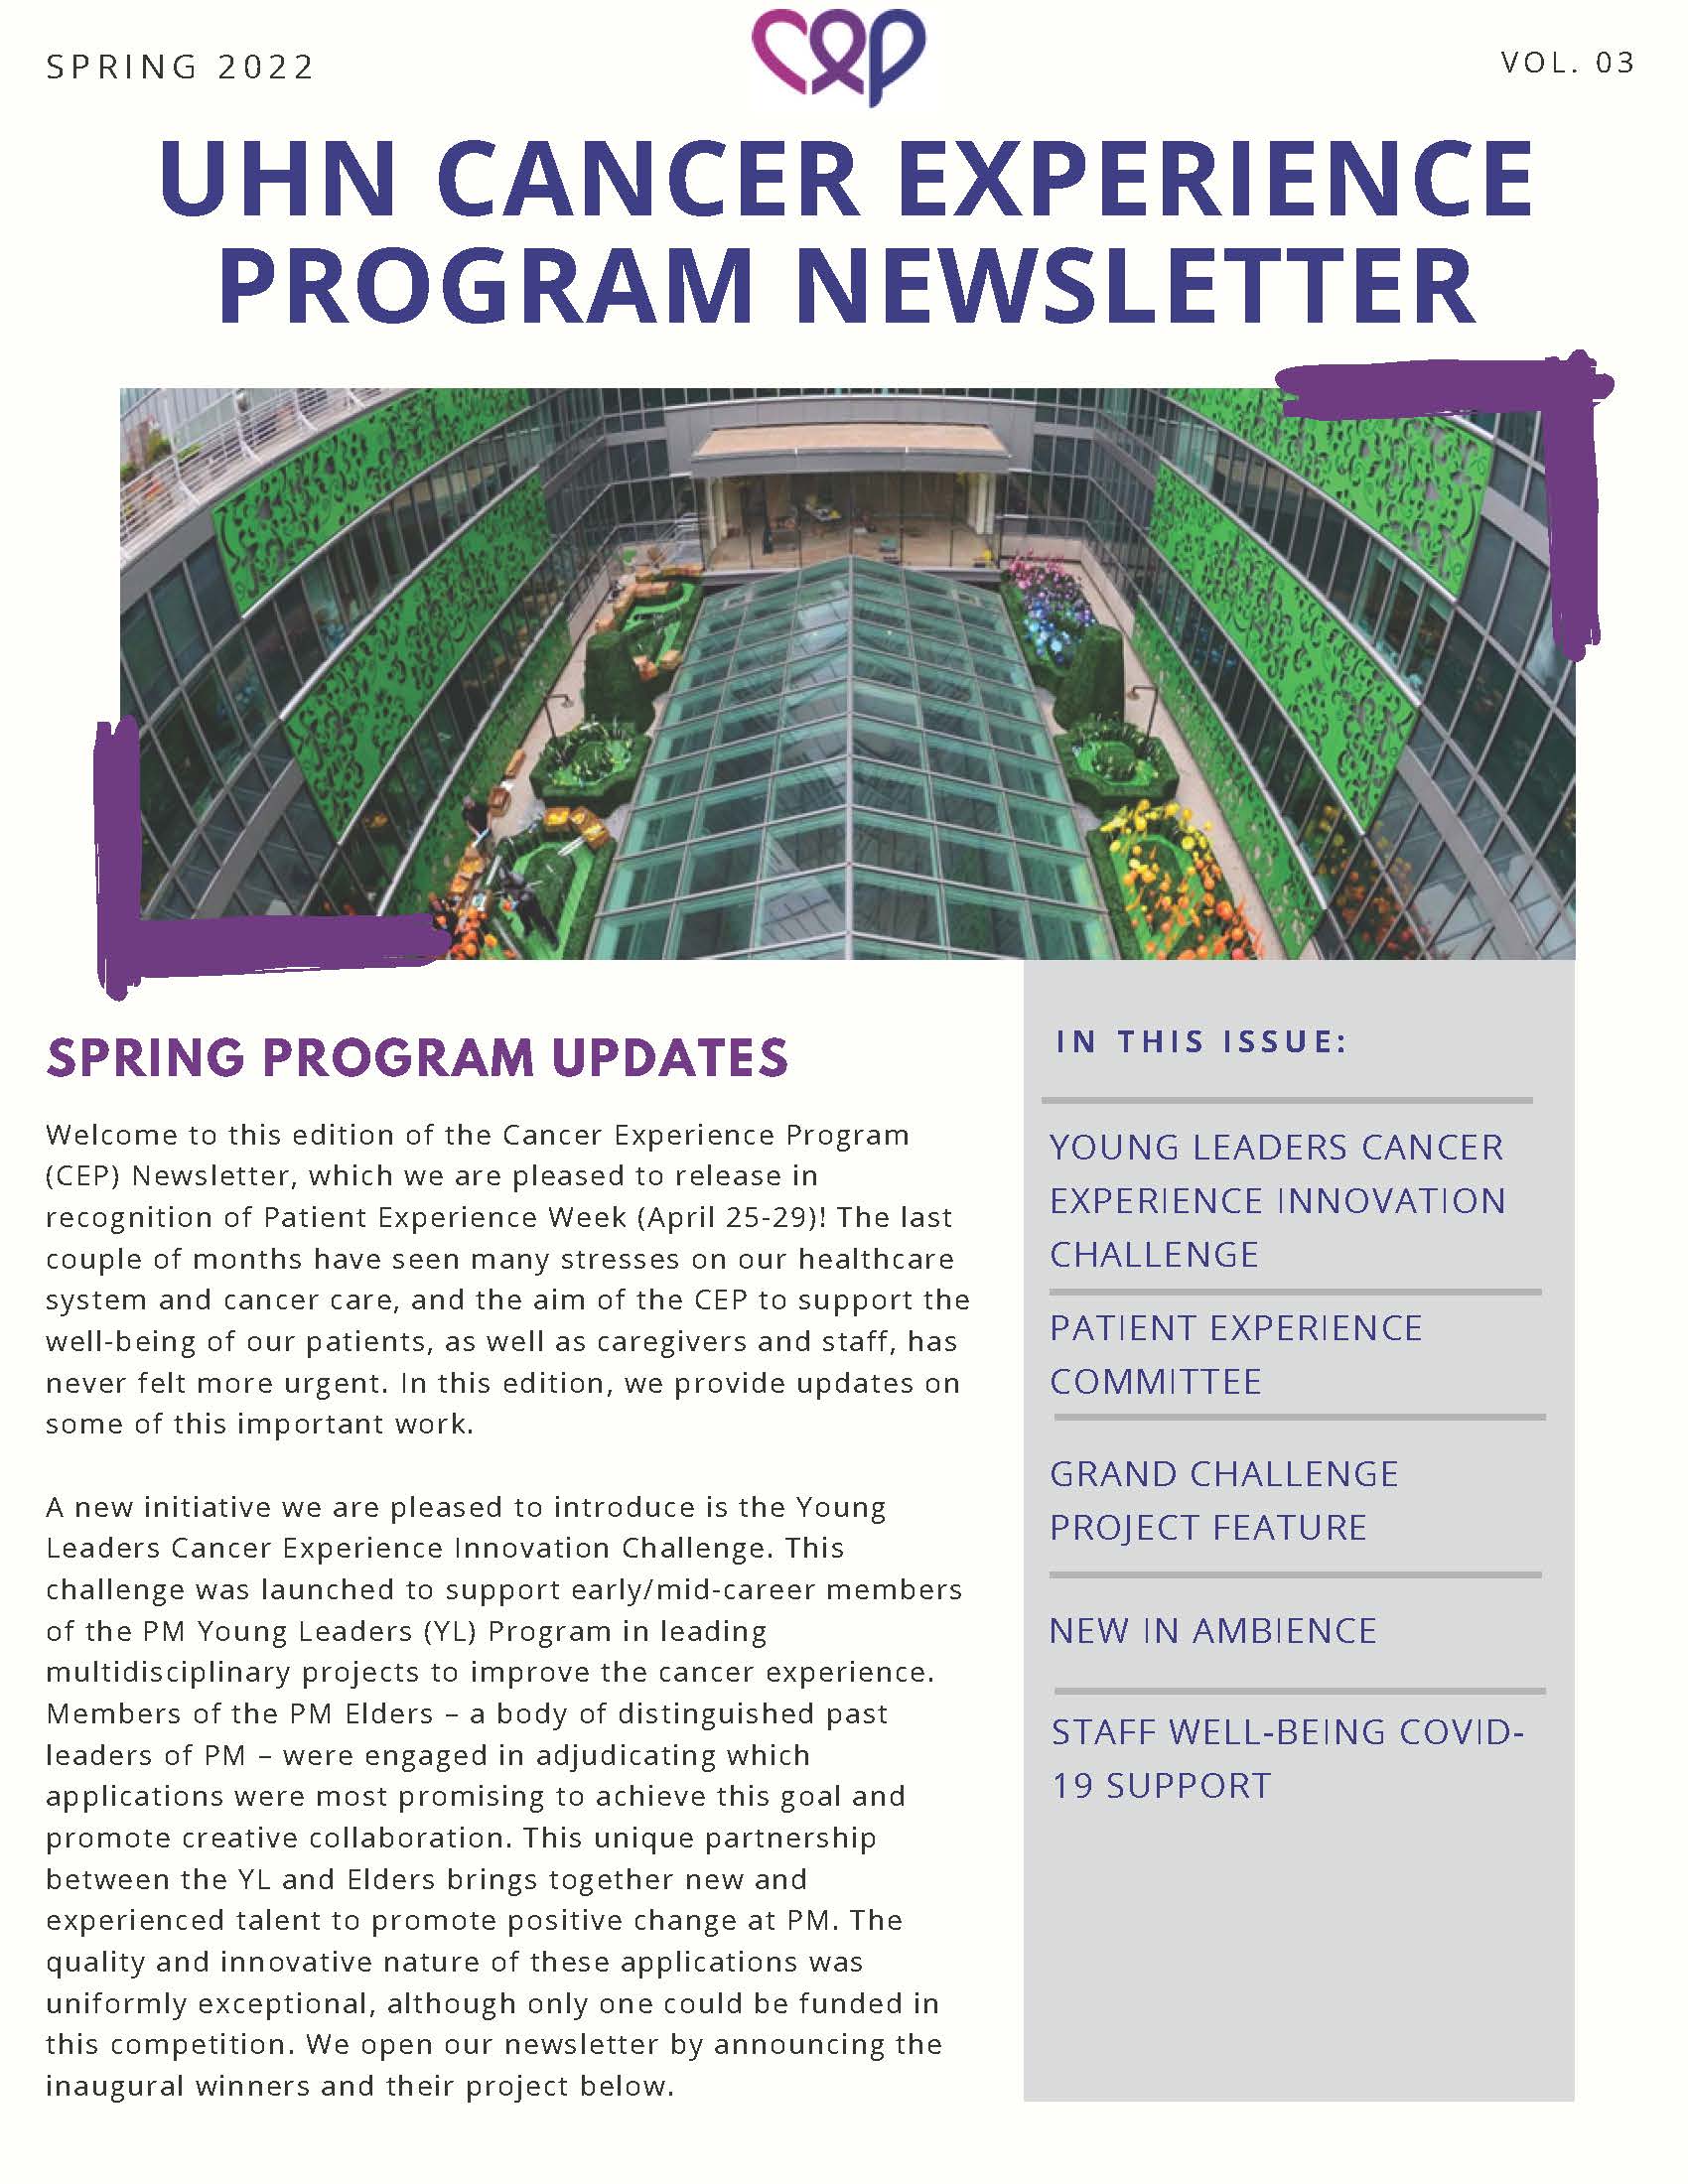 Cancer Experience Program Newsletter Spring 2022